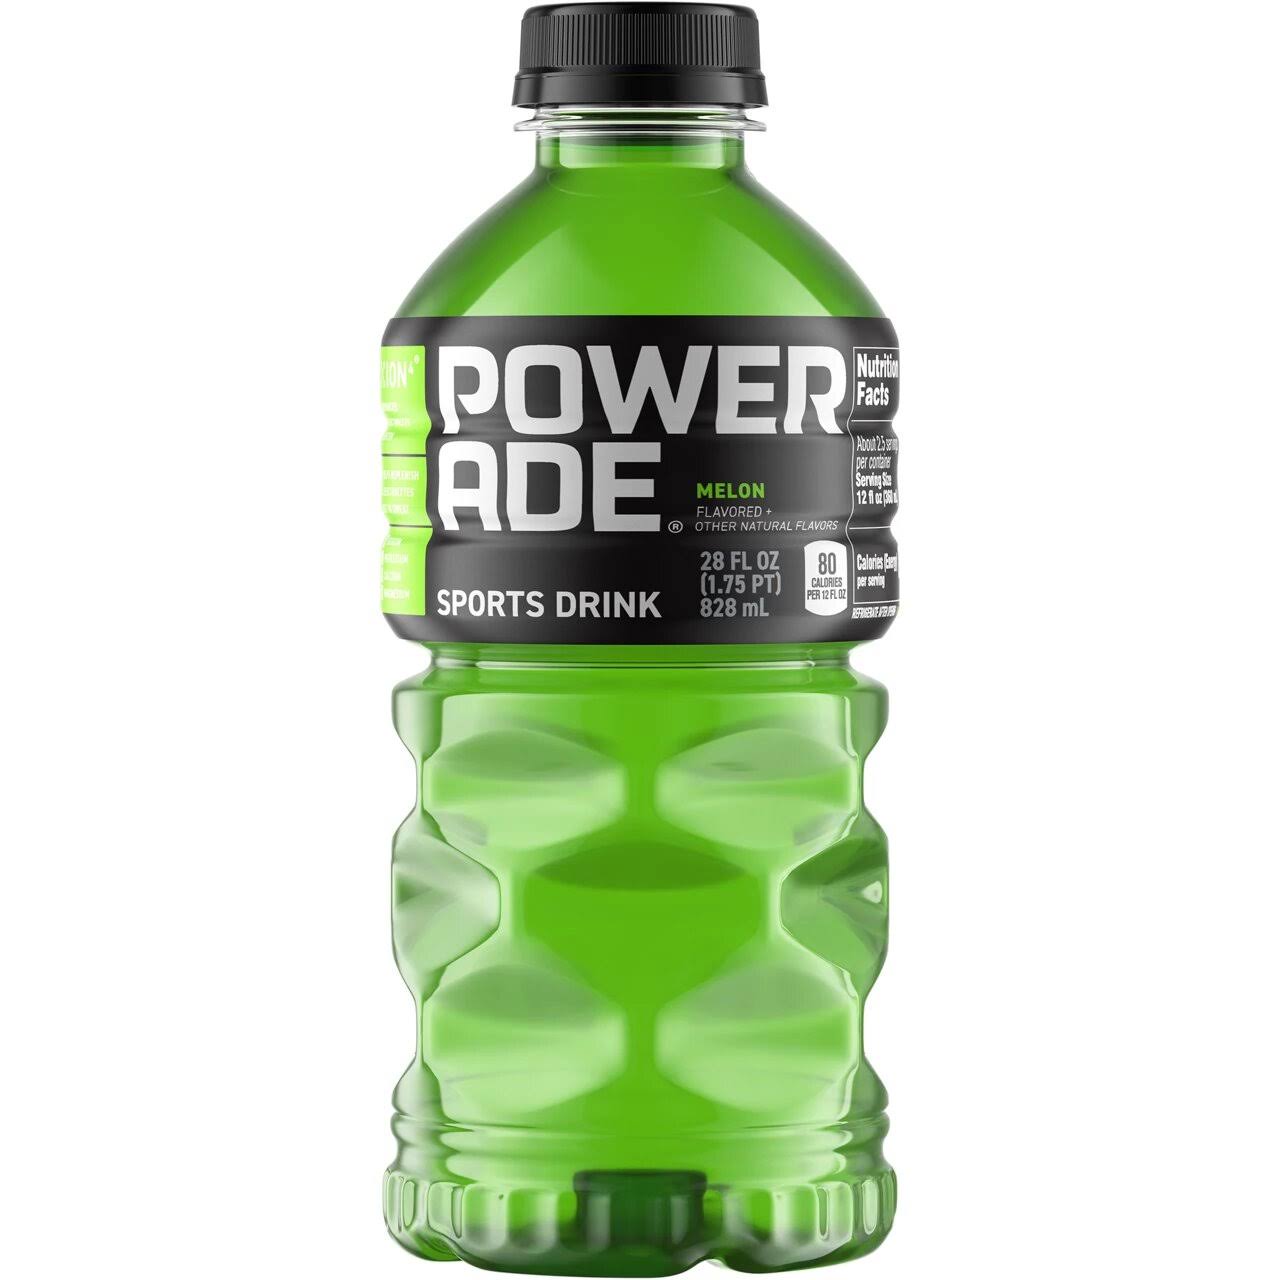 Powerade Sports Drink, Melon - 28 fl oz